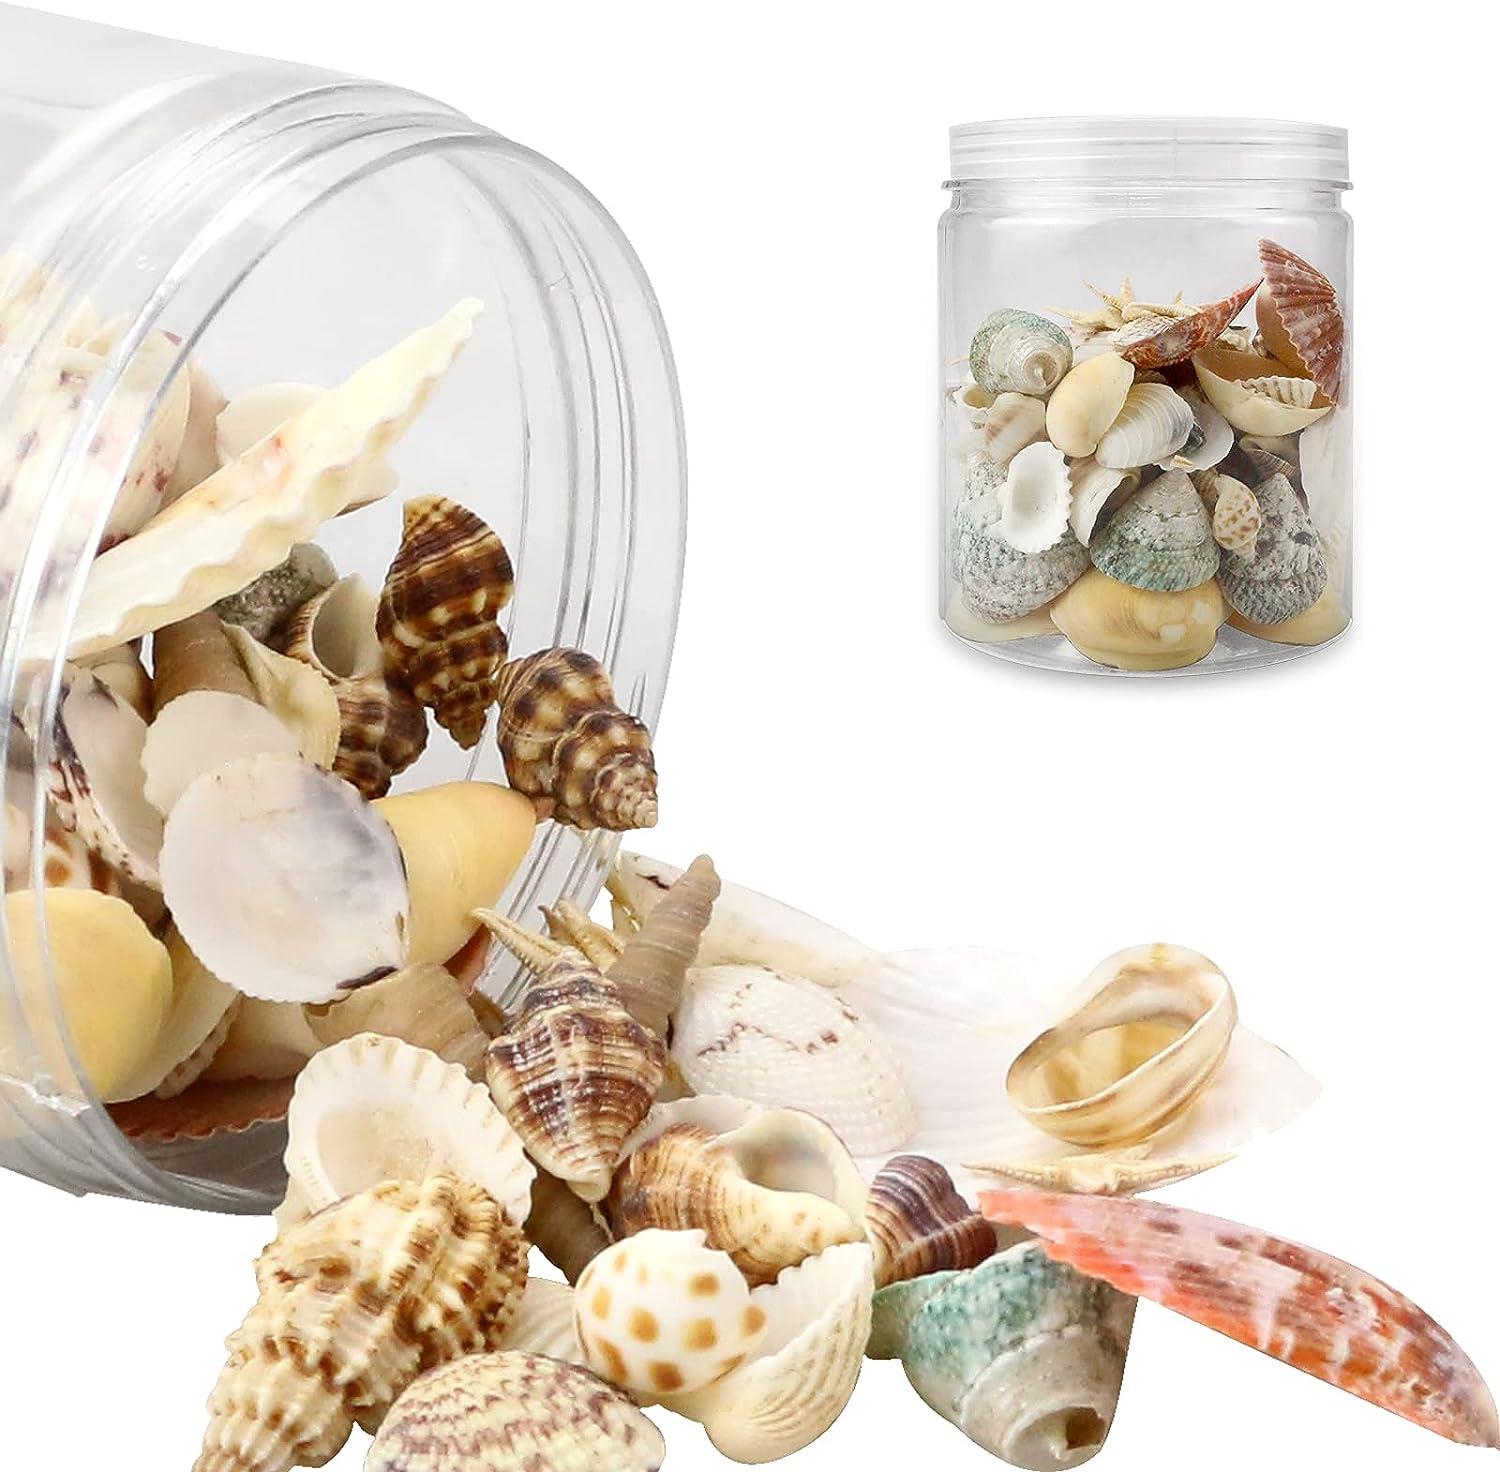 Weoxpr 200pcs Sea Shells Mixed Ocean Beach Seashells, Various Sizes Natural  Seashells for Fish Tank, Home Decorations, Beach Theme Party, Candle  Making, Wedding Decor, DIY Crafts, Fish Tan